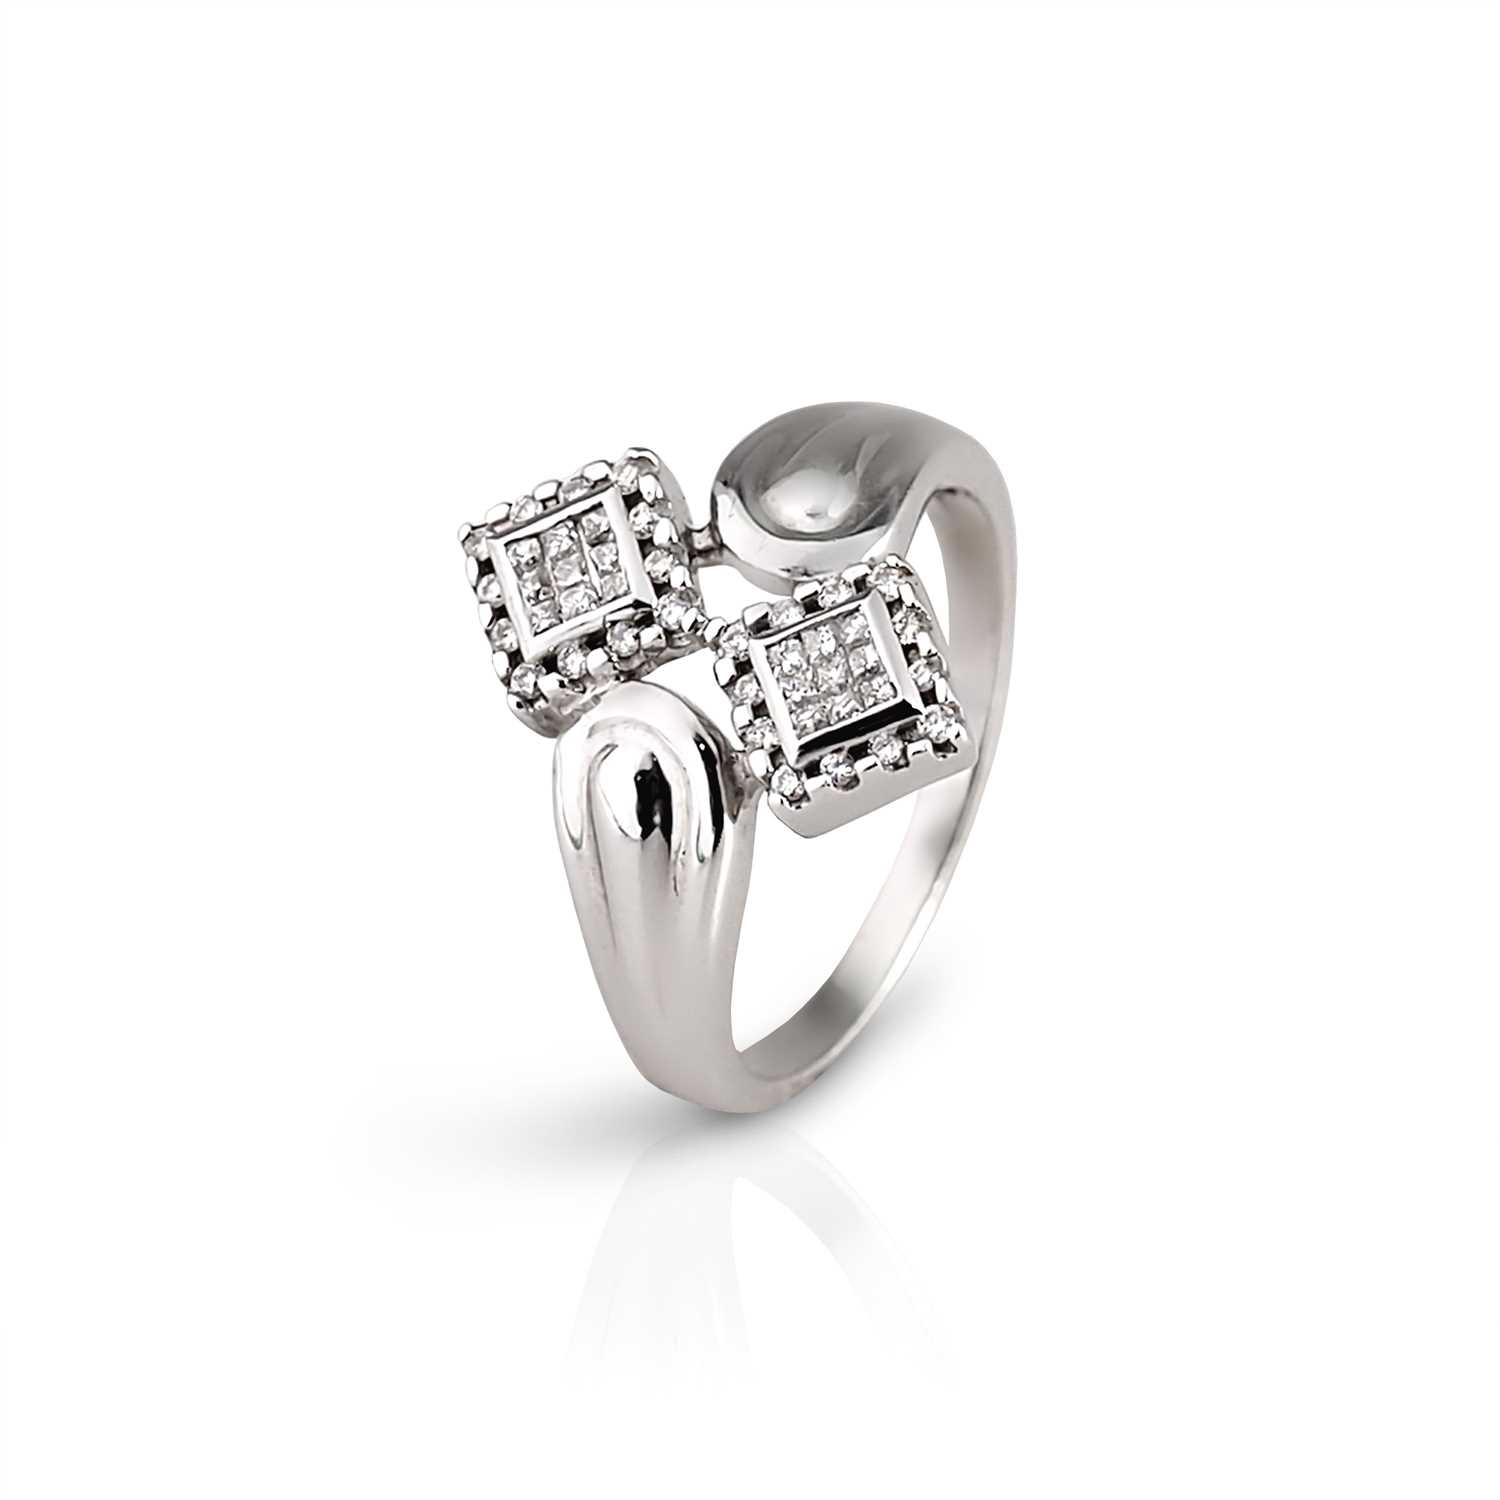 Lot 550 - 14K White Gold Diamond Ring